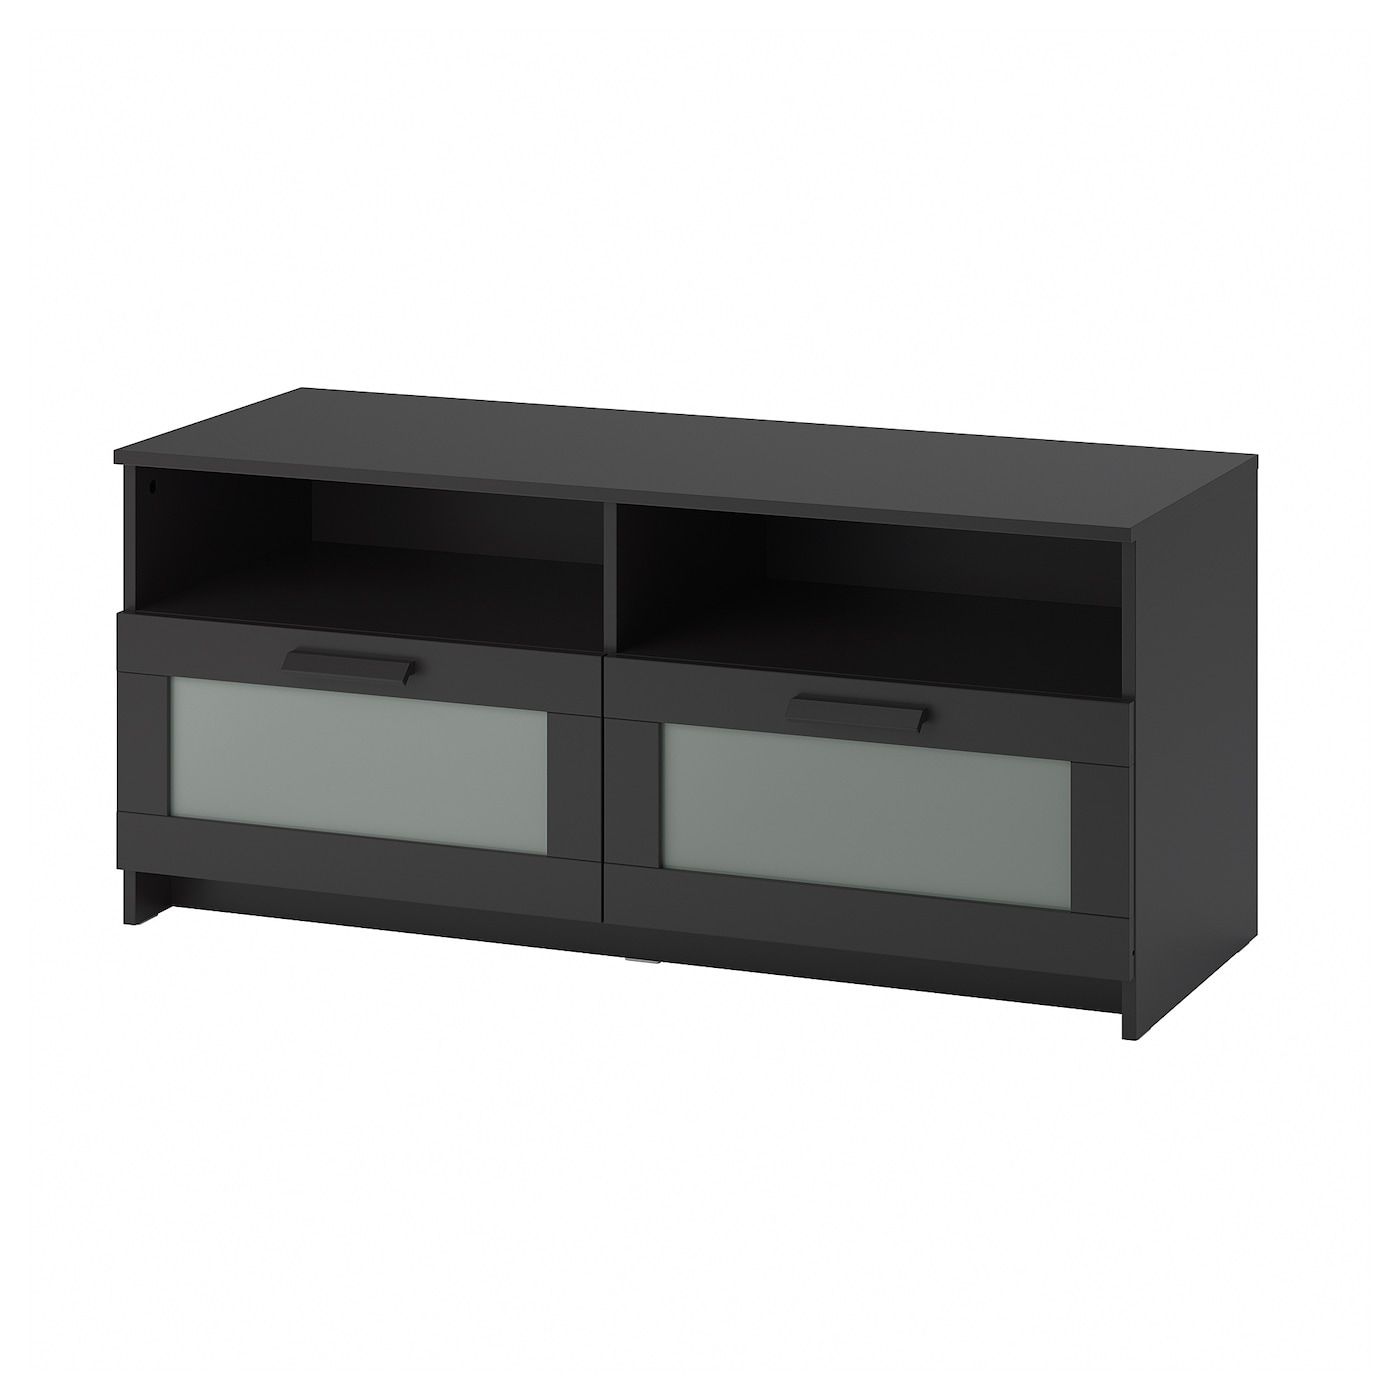 Brimnes Tv Bench Black 120 X 41 X 53 Cm – Ikea Inside Tv Bench Unit (View 12 of 15)